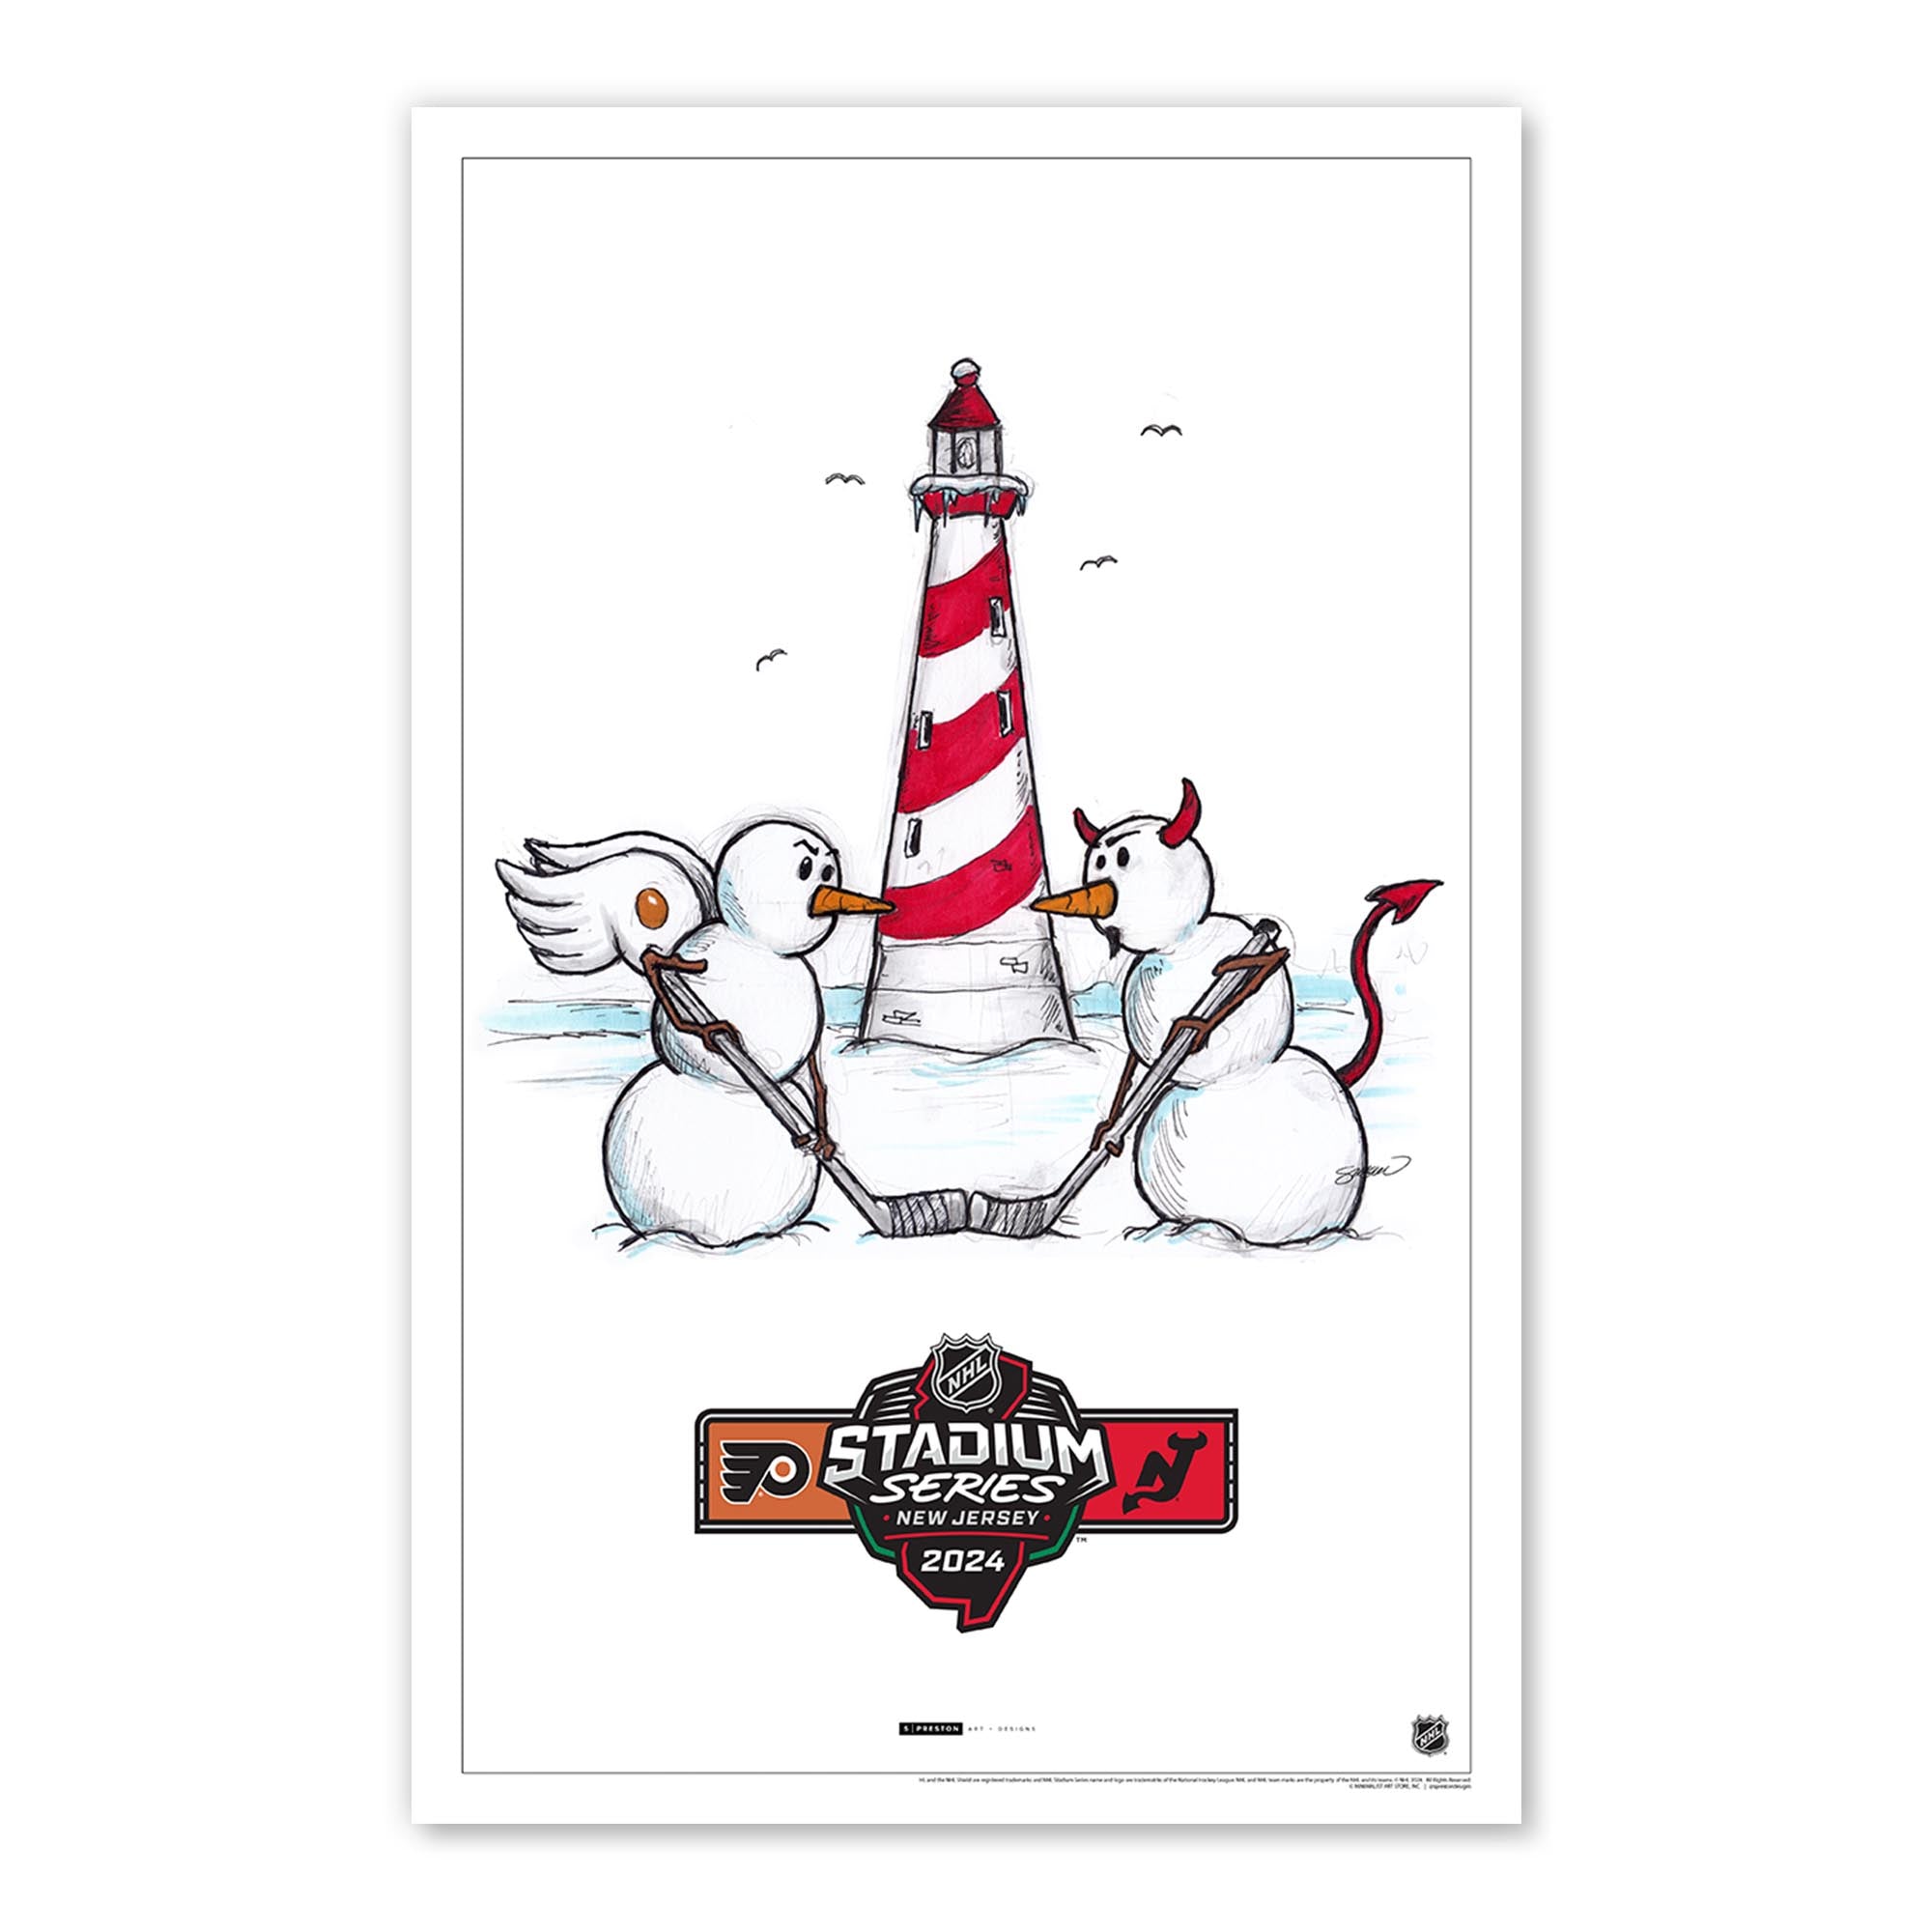 2024 NHL Stadium Series Sketch Limited Edition Print - Flyers vs Devils